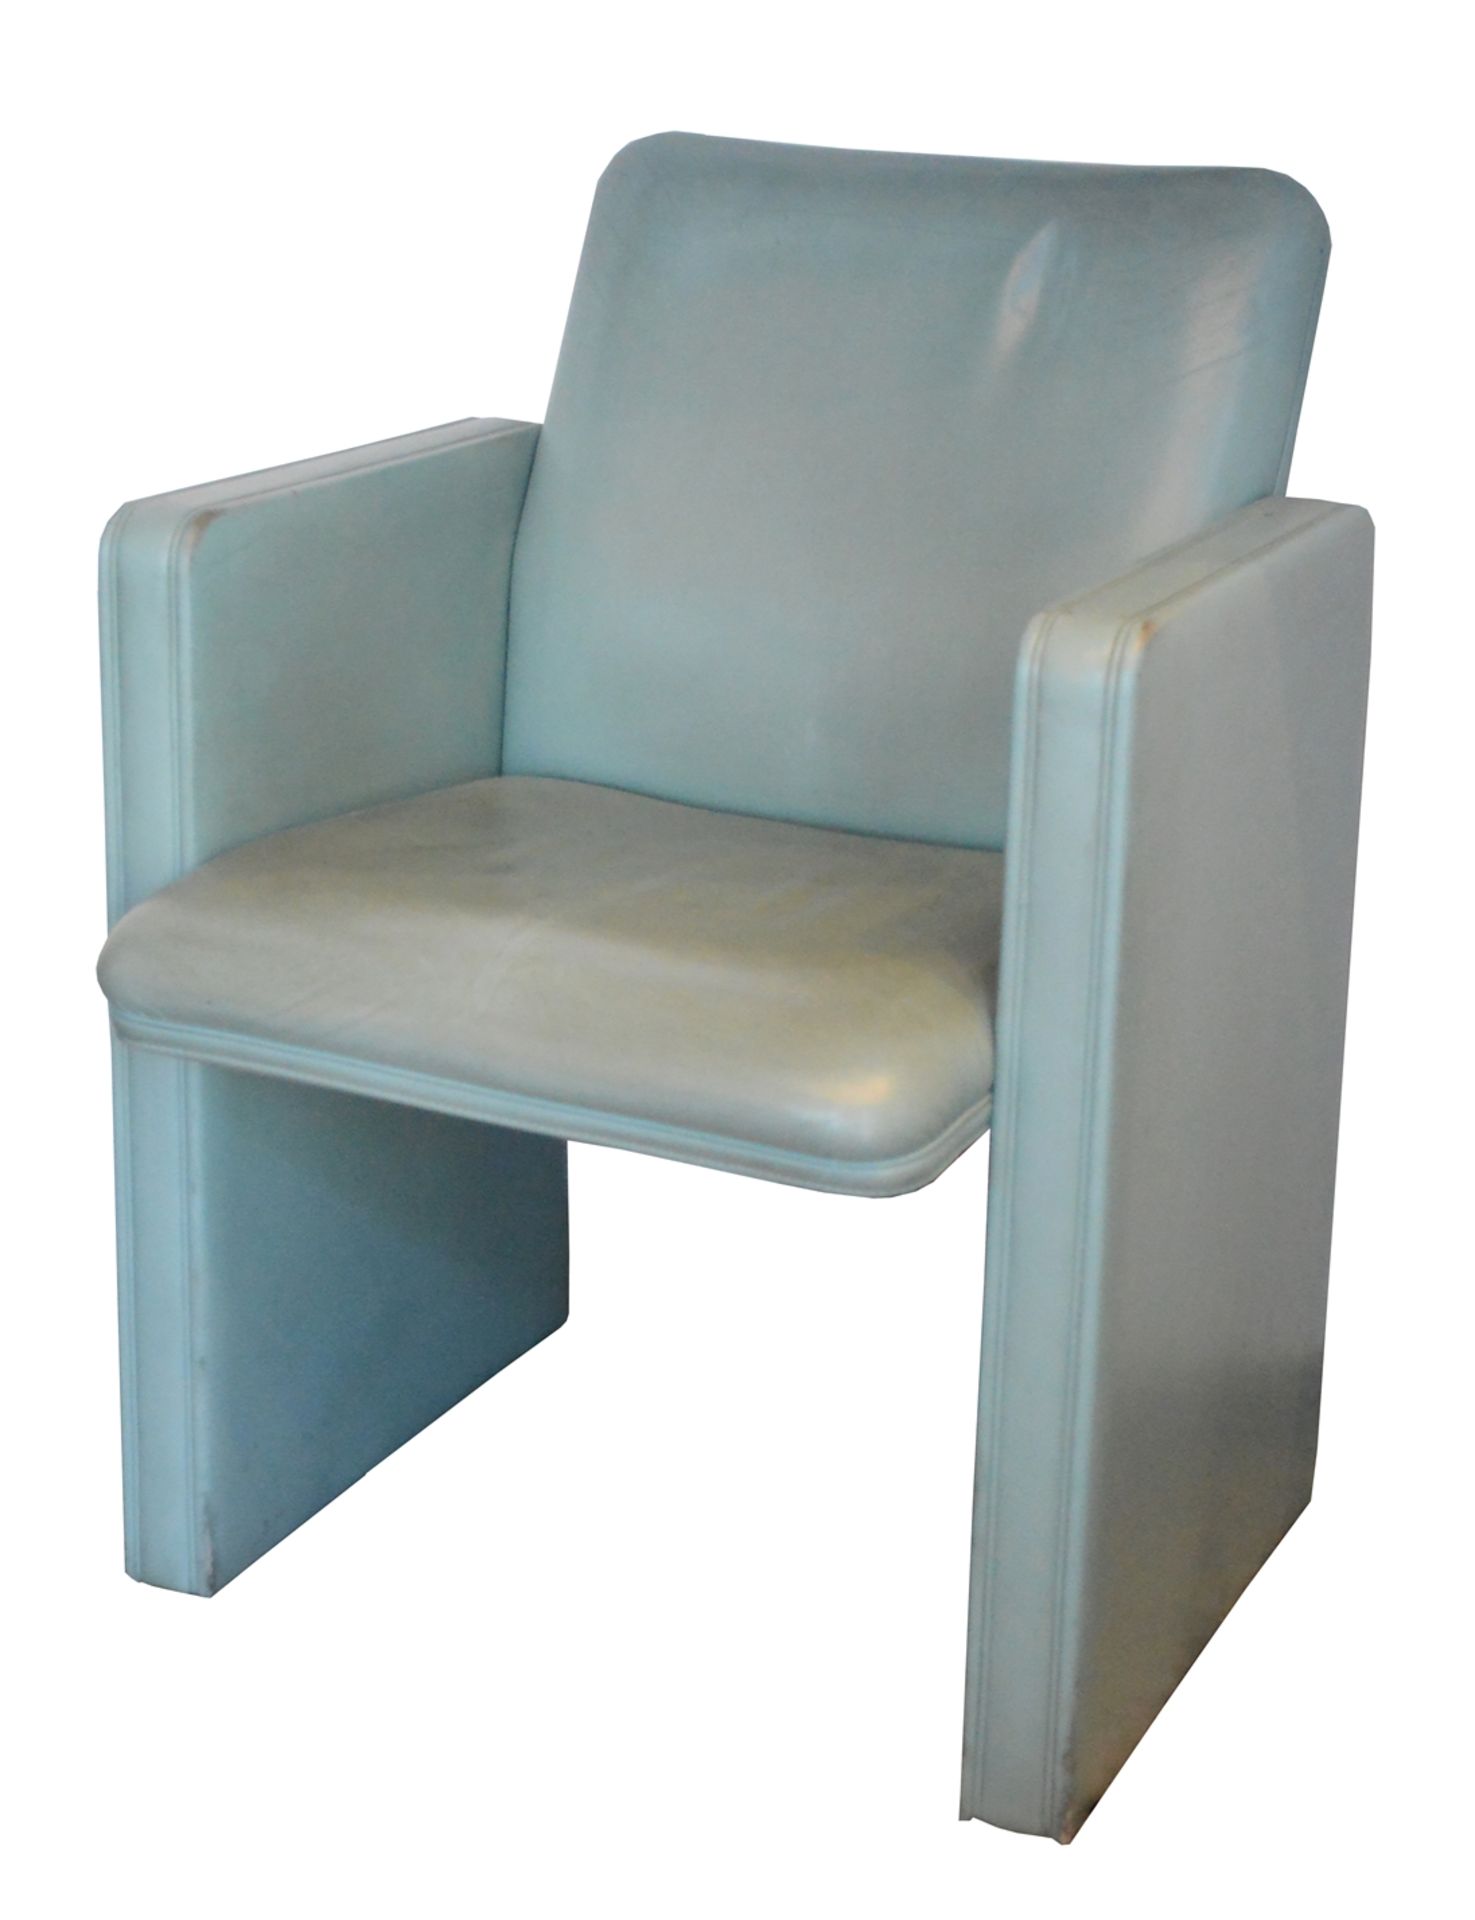 Zwei Sessel, Poltrona Frau, Tito Agnoli, graugrün, 83x60x53cm, Sitzhöhe 47cmTwo armchairs, - Image 4 of 4